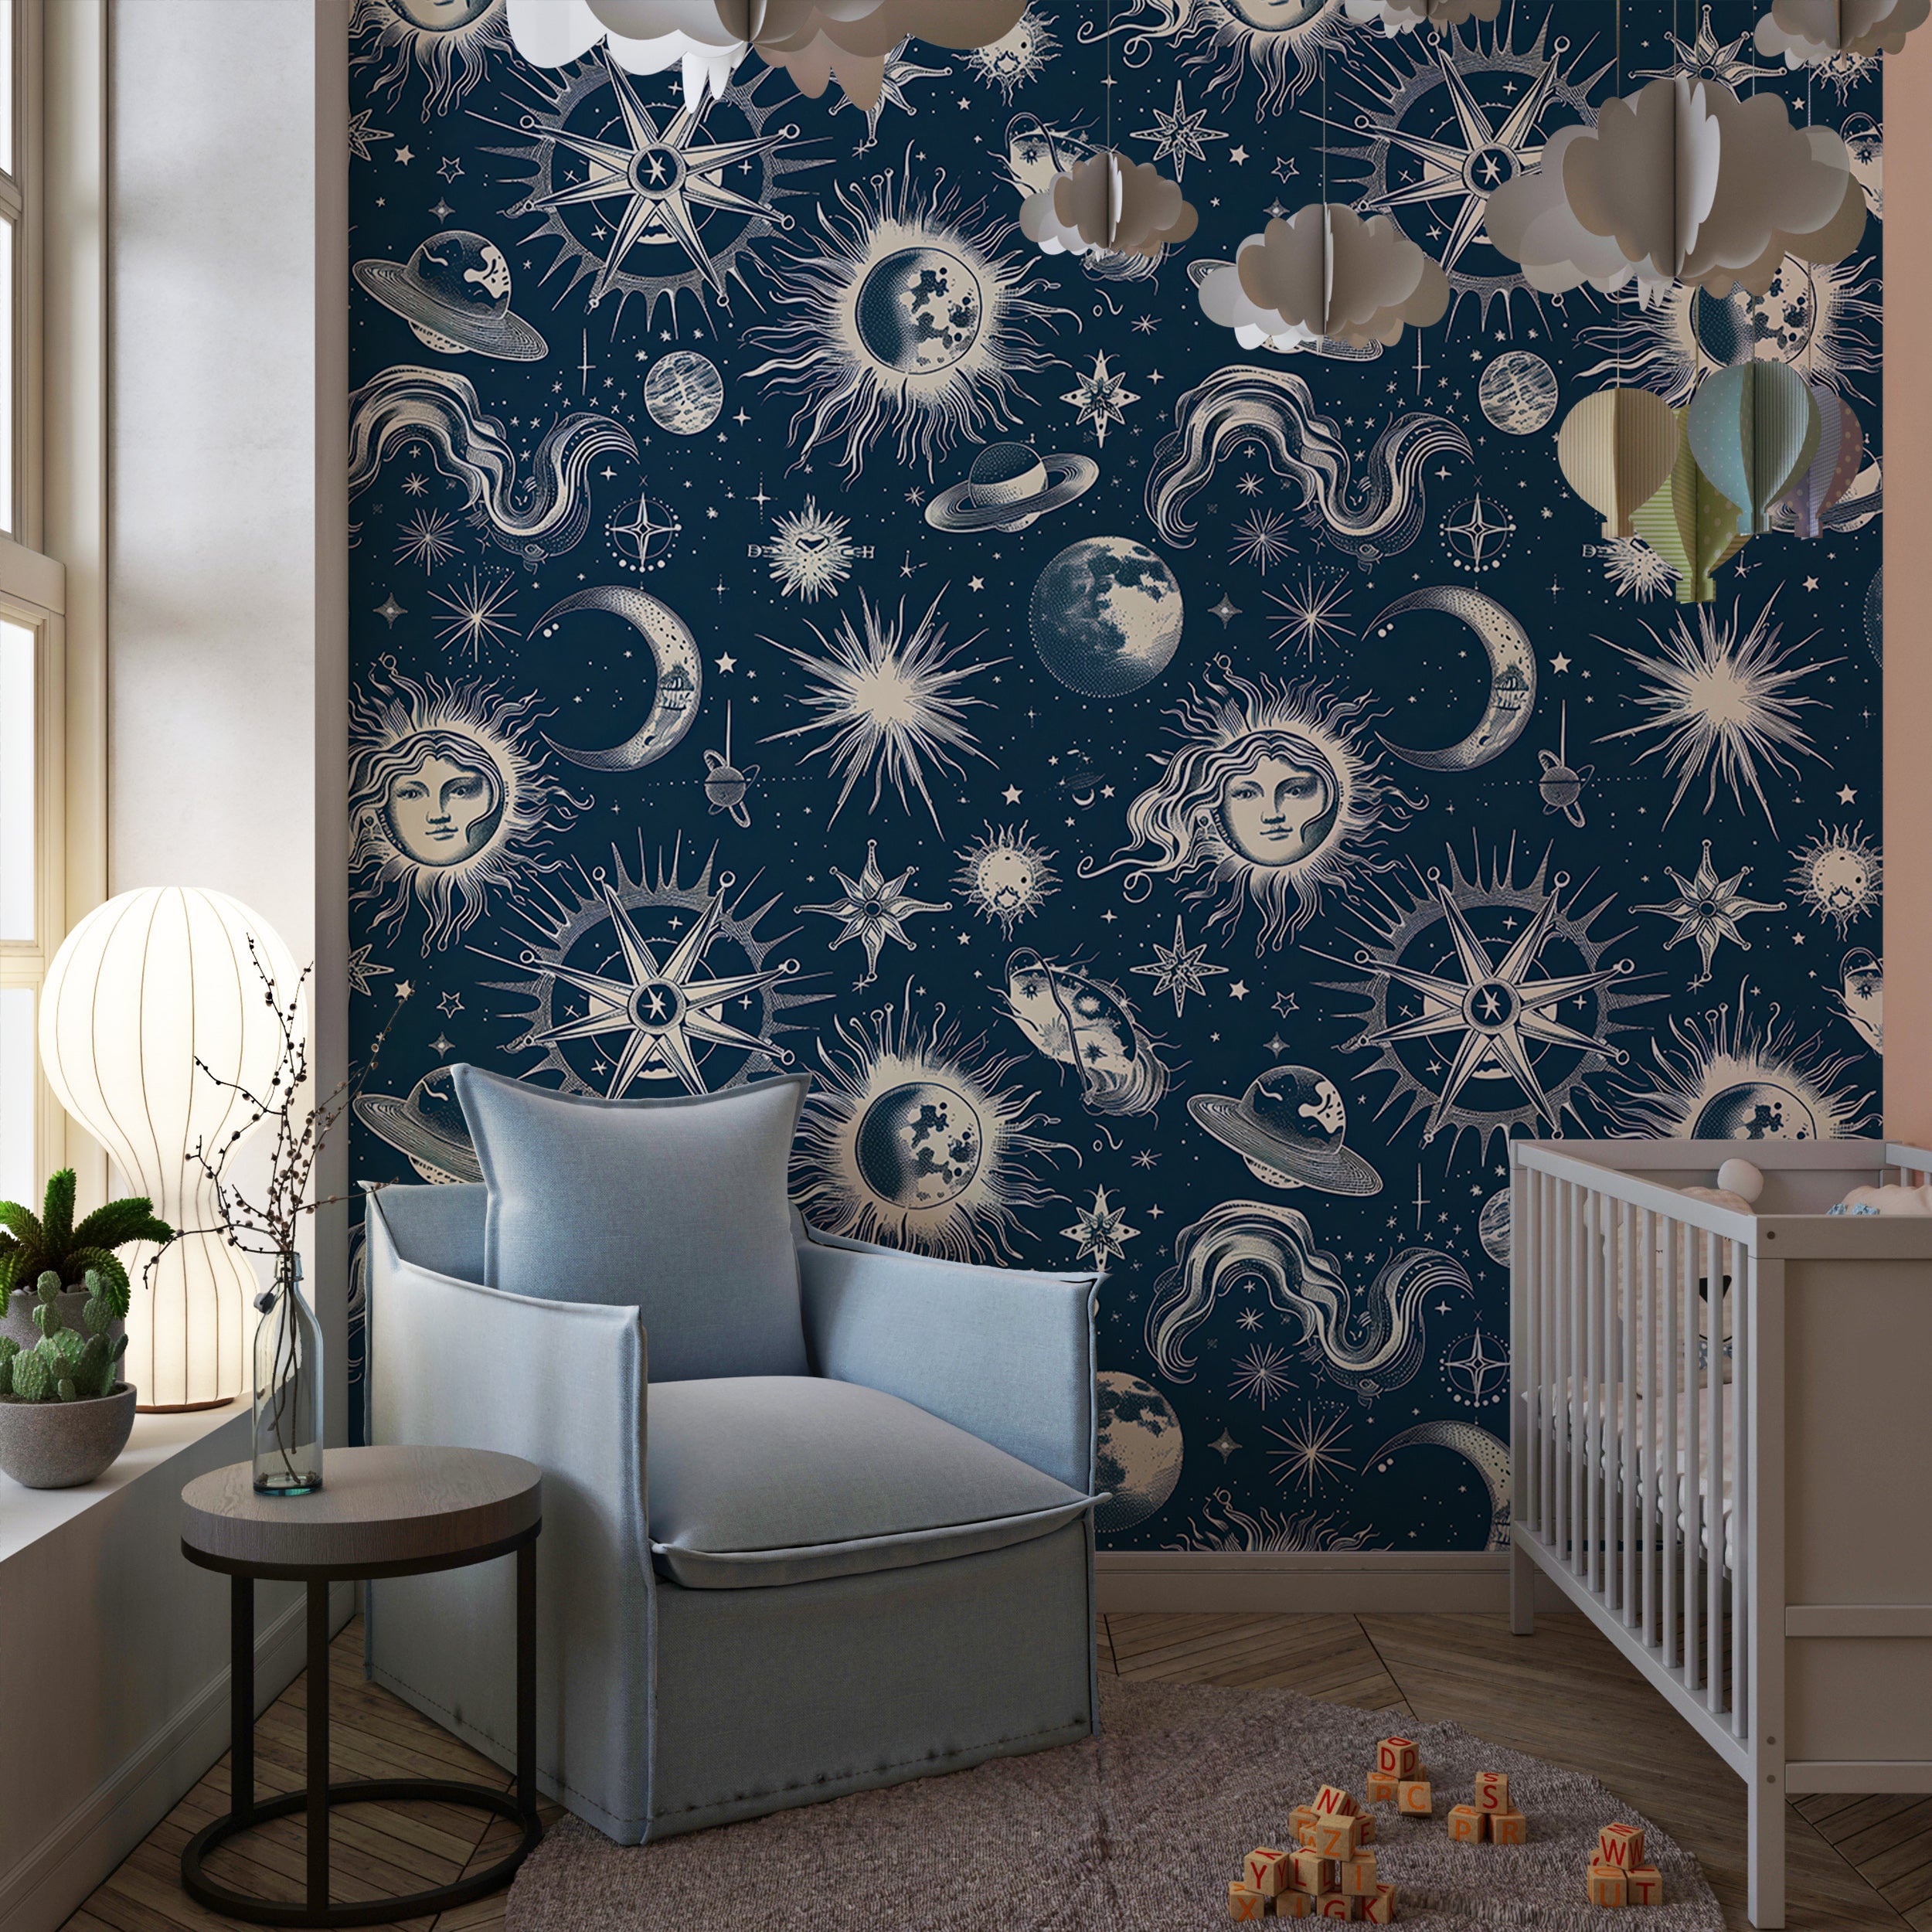 Celestial night sky wallpaper Removable celestial symbols wallpaper